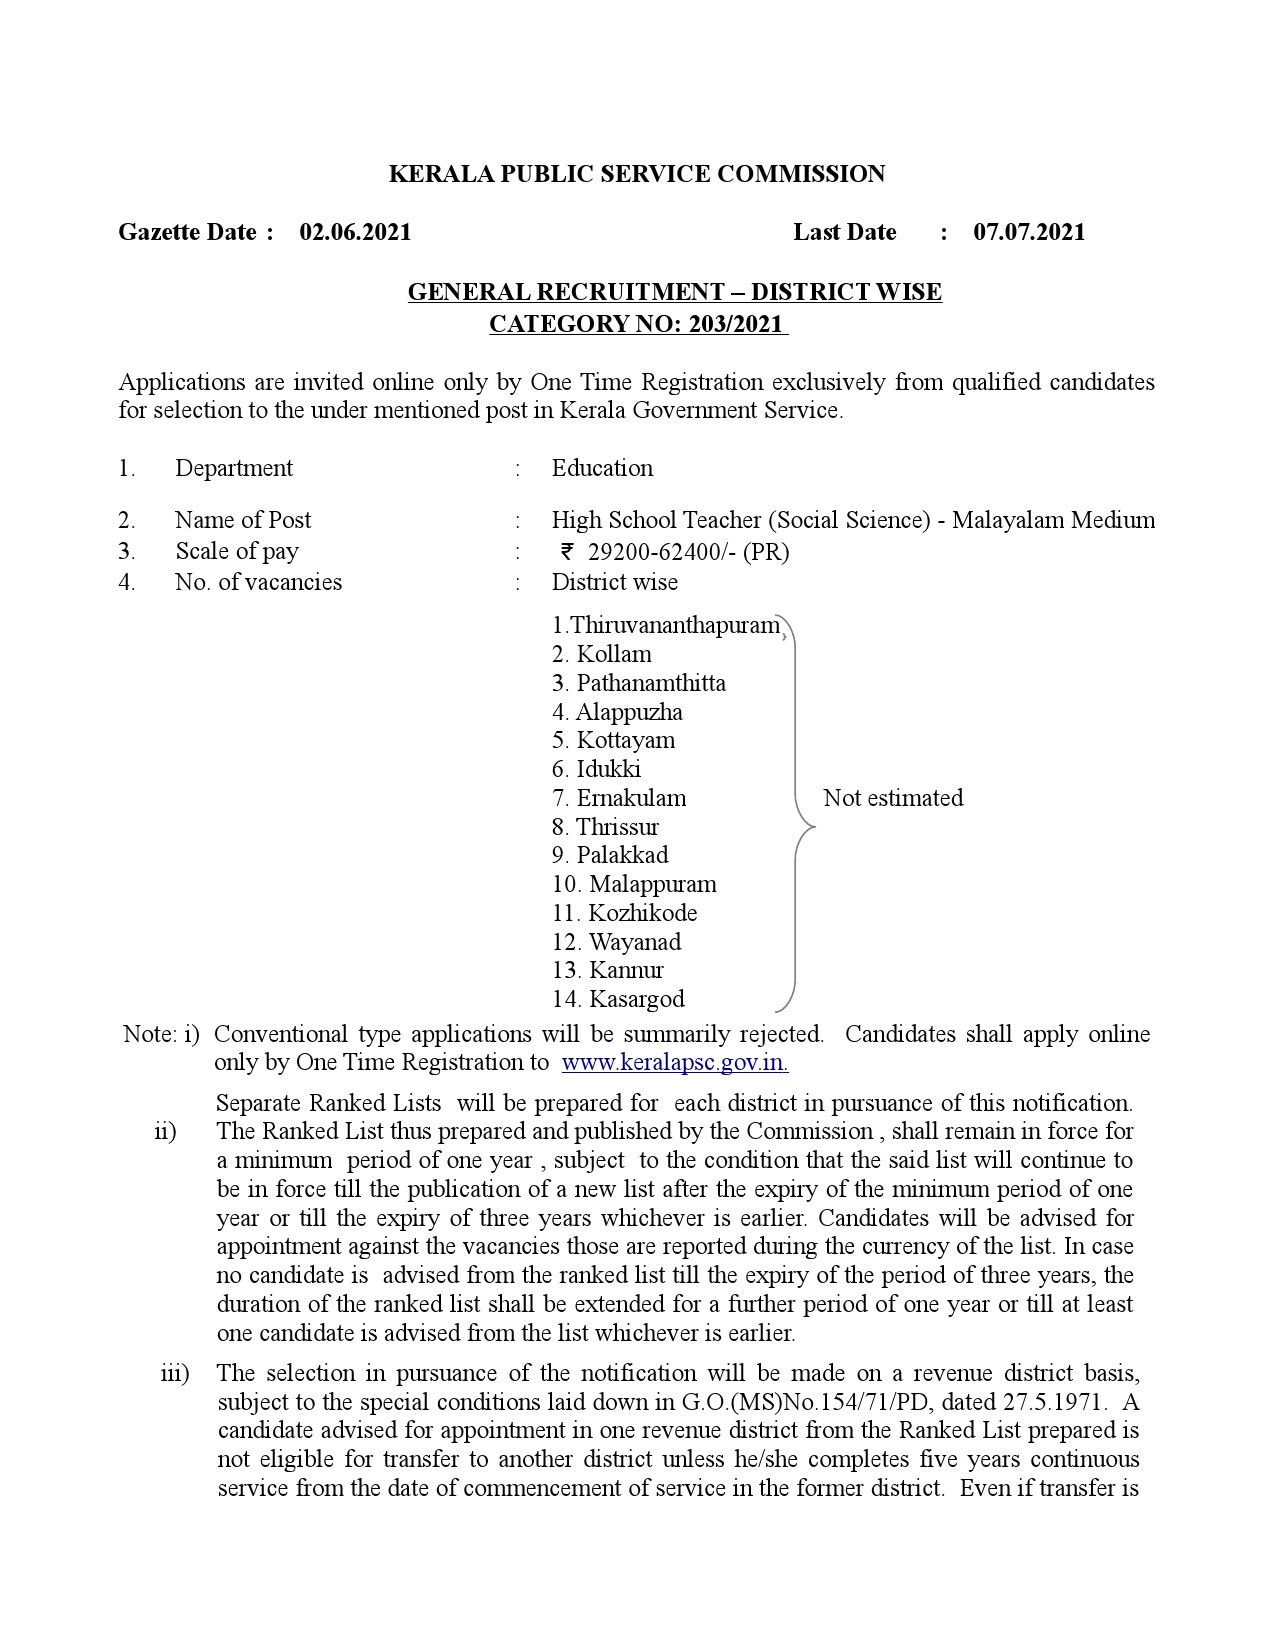 KPSC Notification for High School Teacher Social Science Malayalam Medium - Notification Image 1